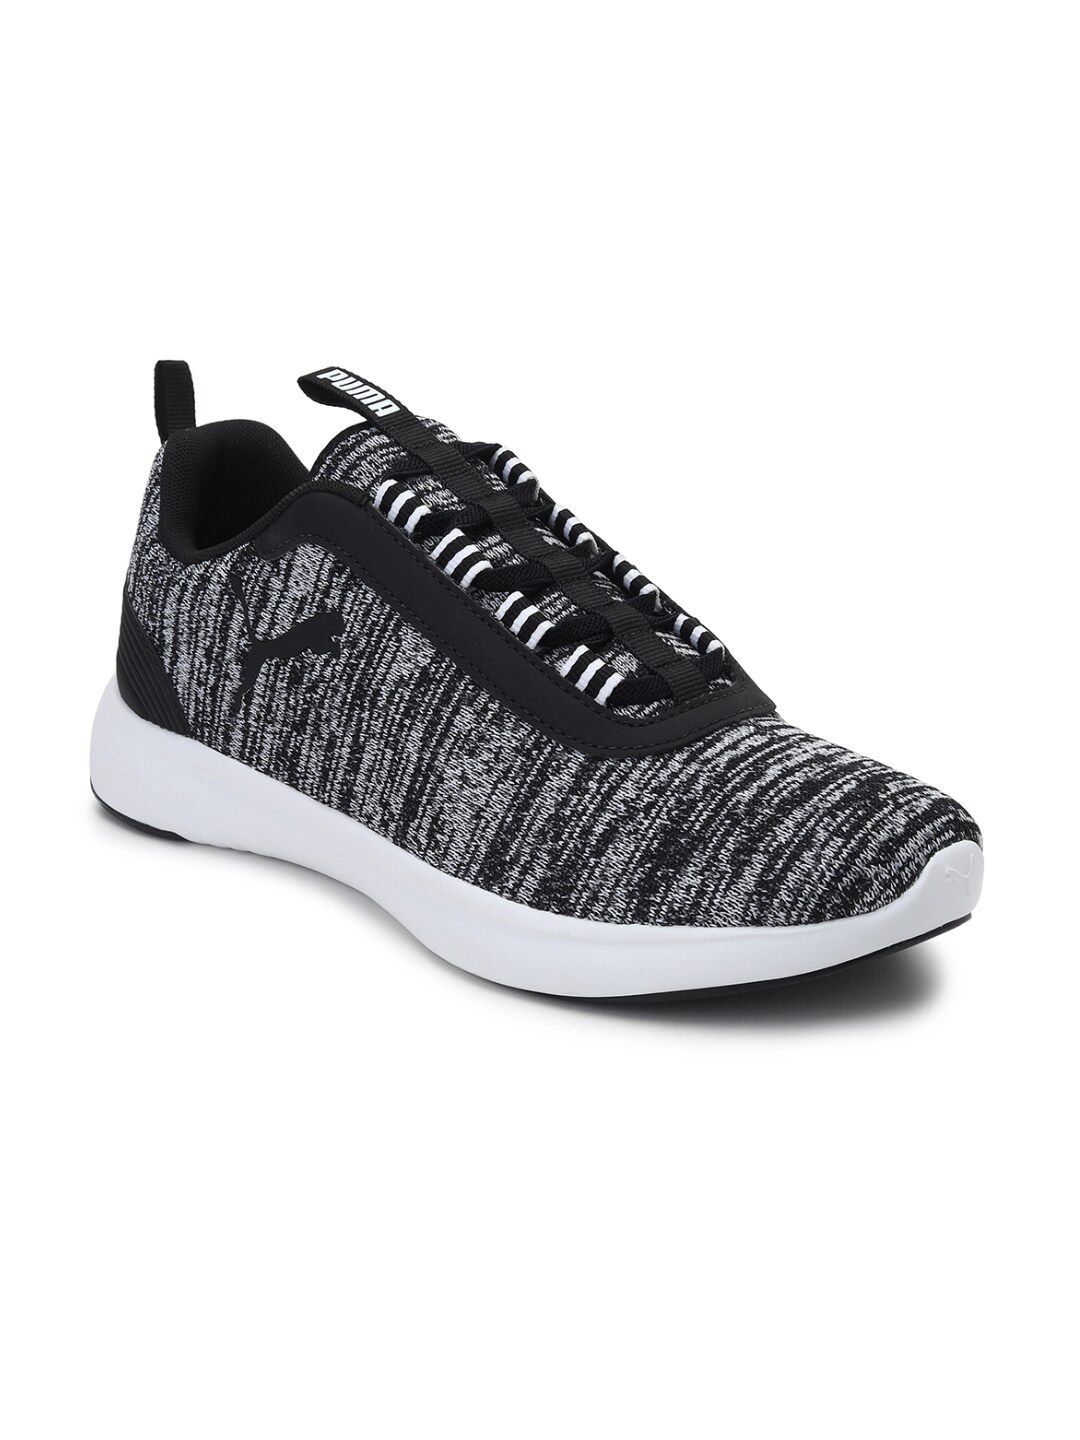 Puma Unisex Black Textile Softride Vital Walking Shoes Price in India